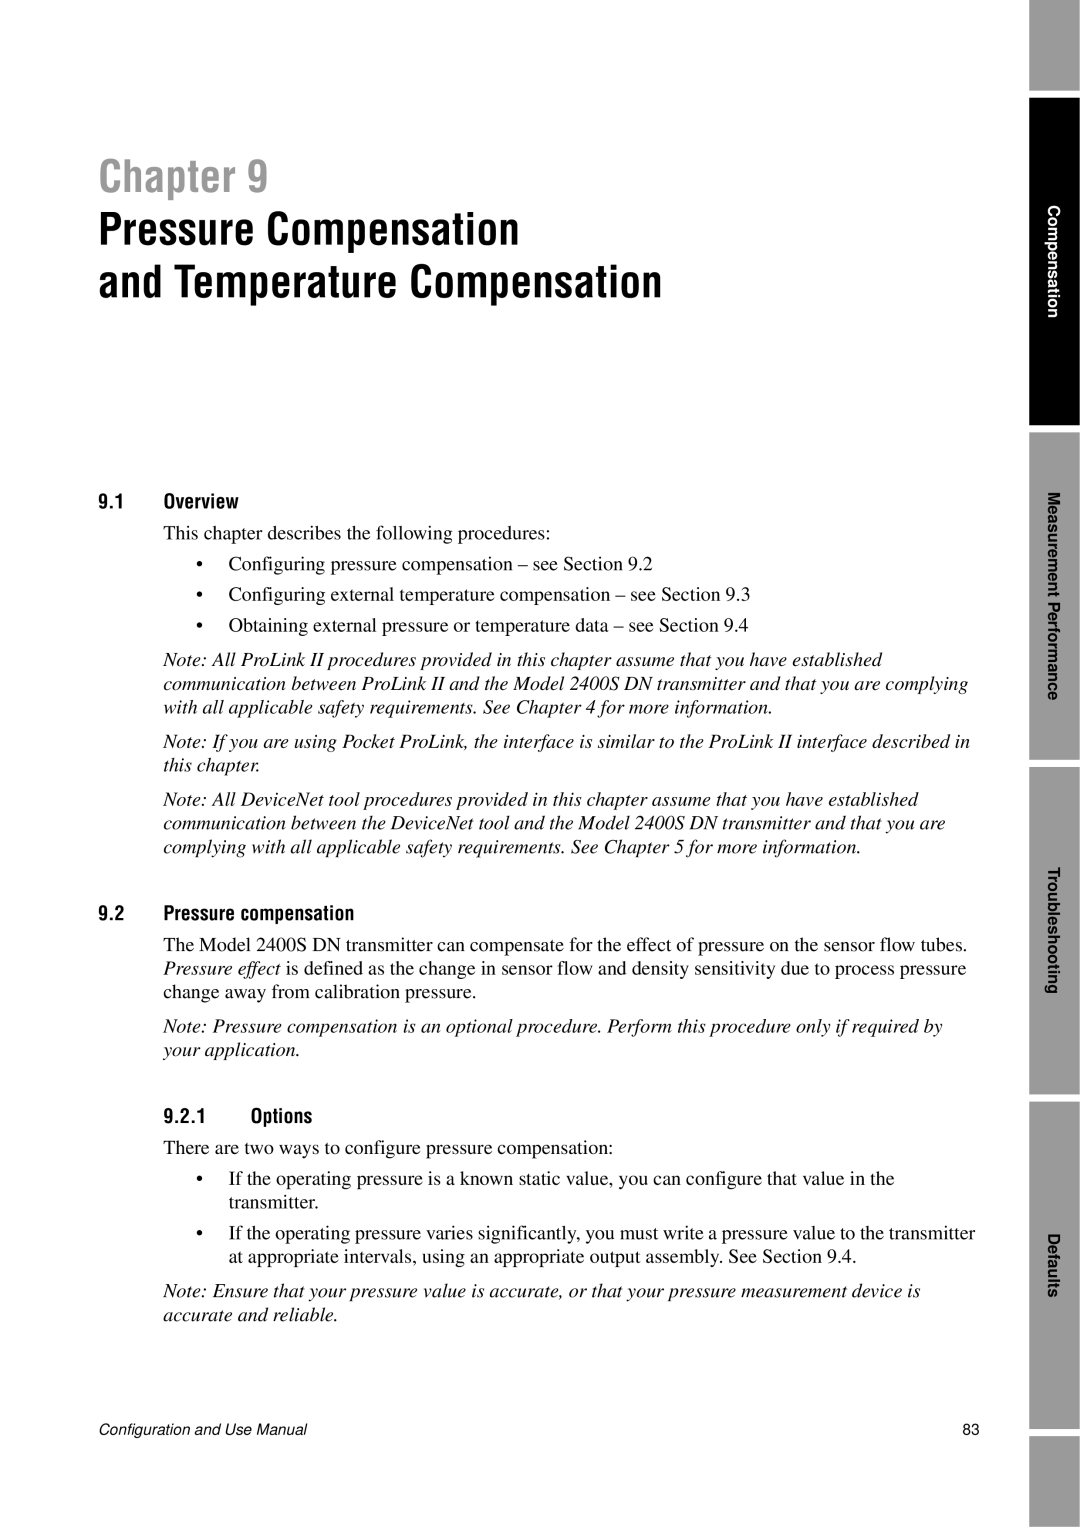 Emerson Process Management 2400S Pressure Compensation, and Temperature Compensation, Chapter, 9.1Overview, 9.2.1Options 